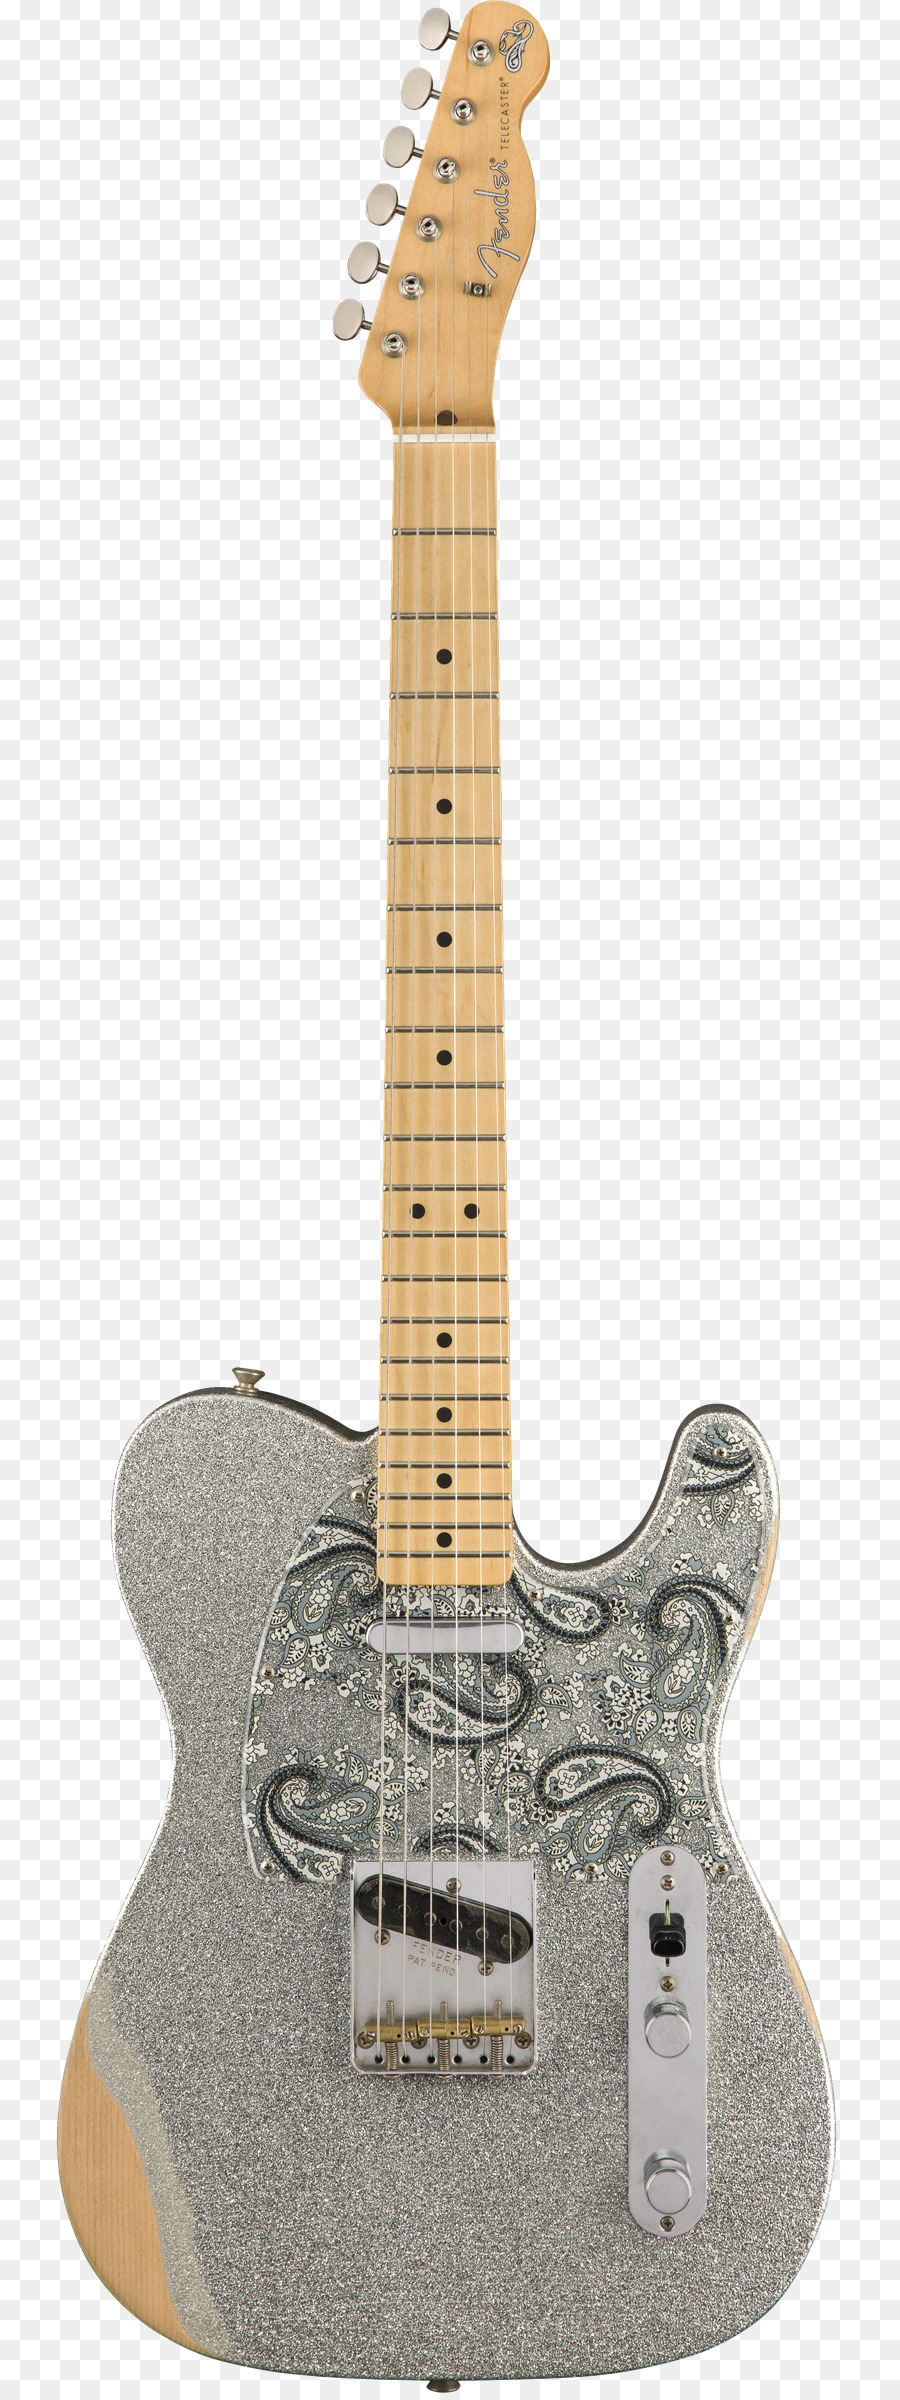 Fender Telecaster Thinline Chitarra Strumenti Musicali Fender Stratocaster - chitarra elettrica